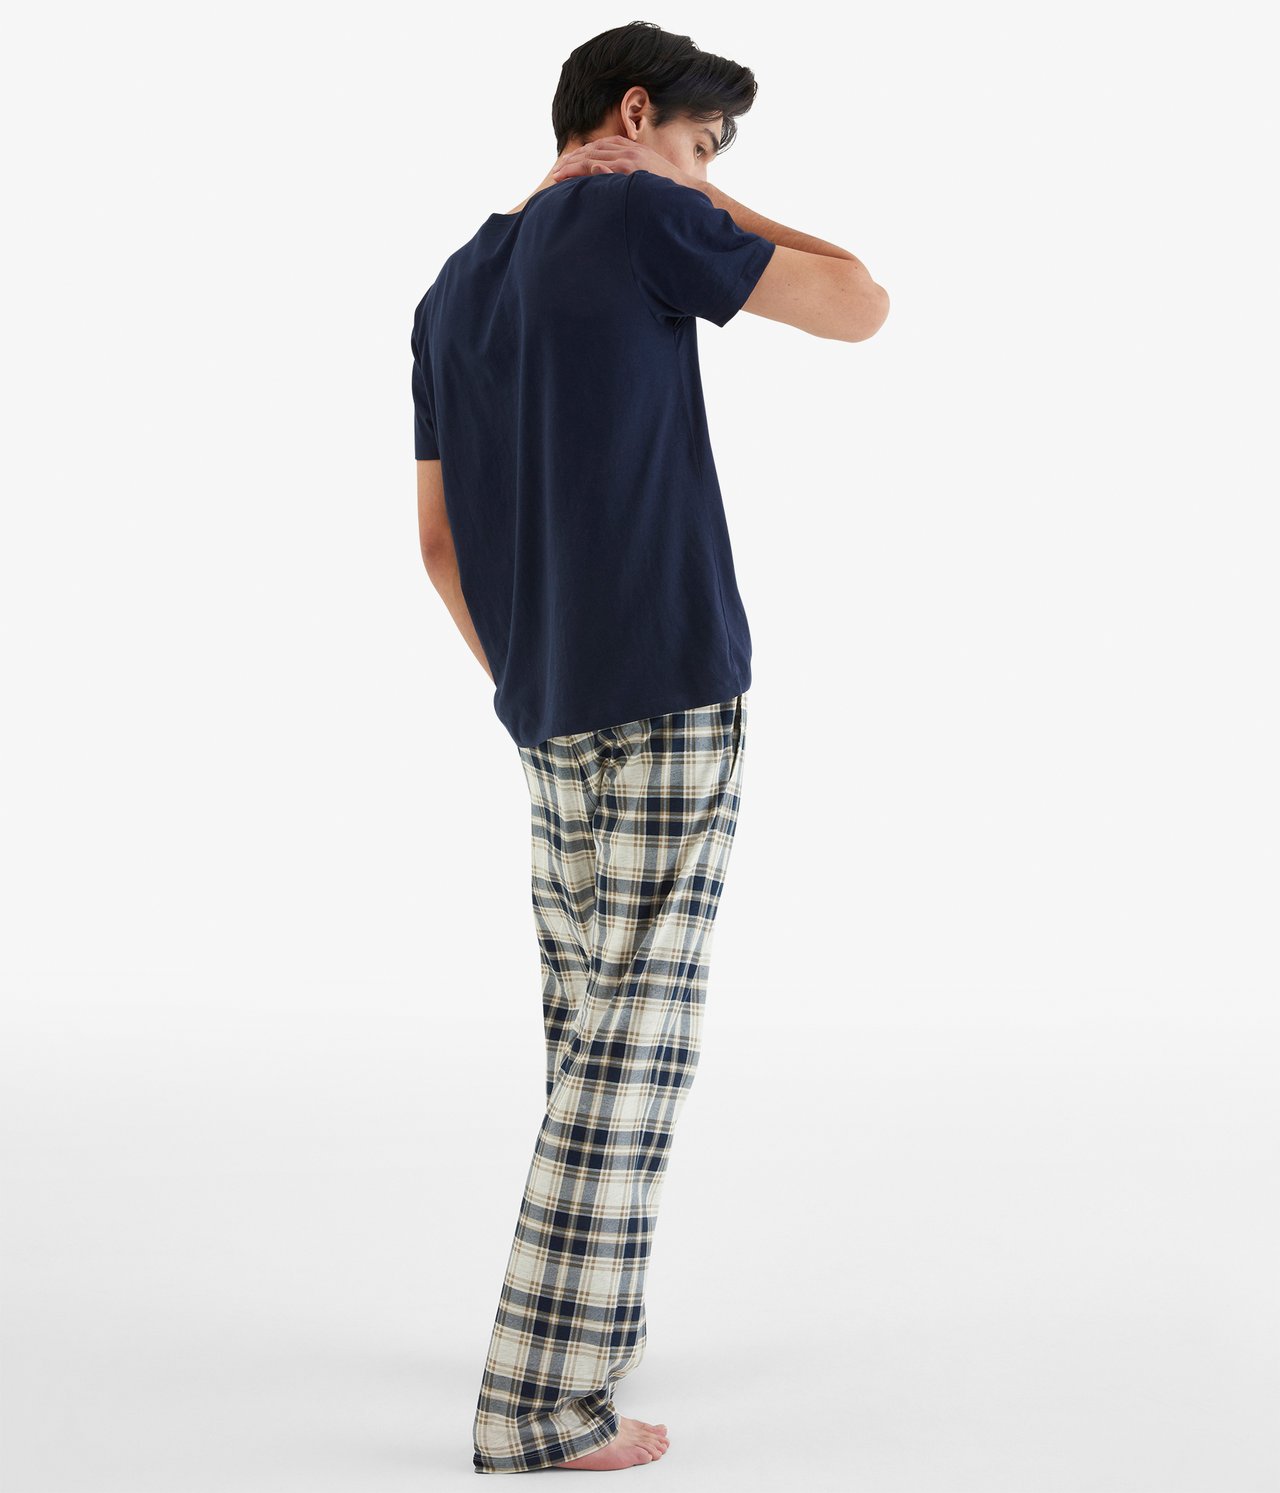 Pyjamasbukse - Mørkeblå - 189cm / Storlek: M - 4